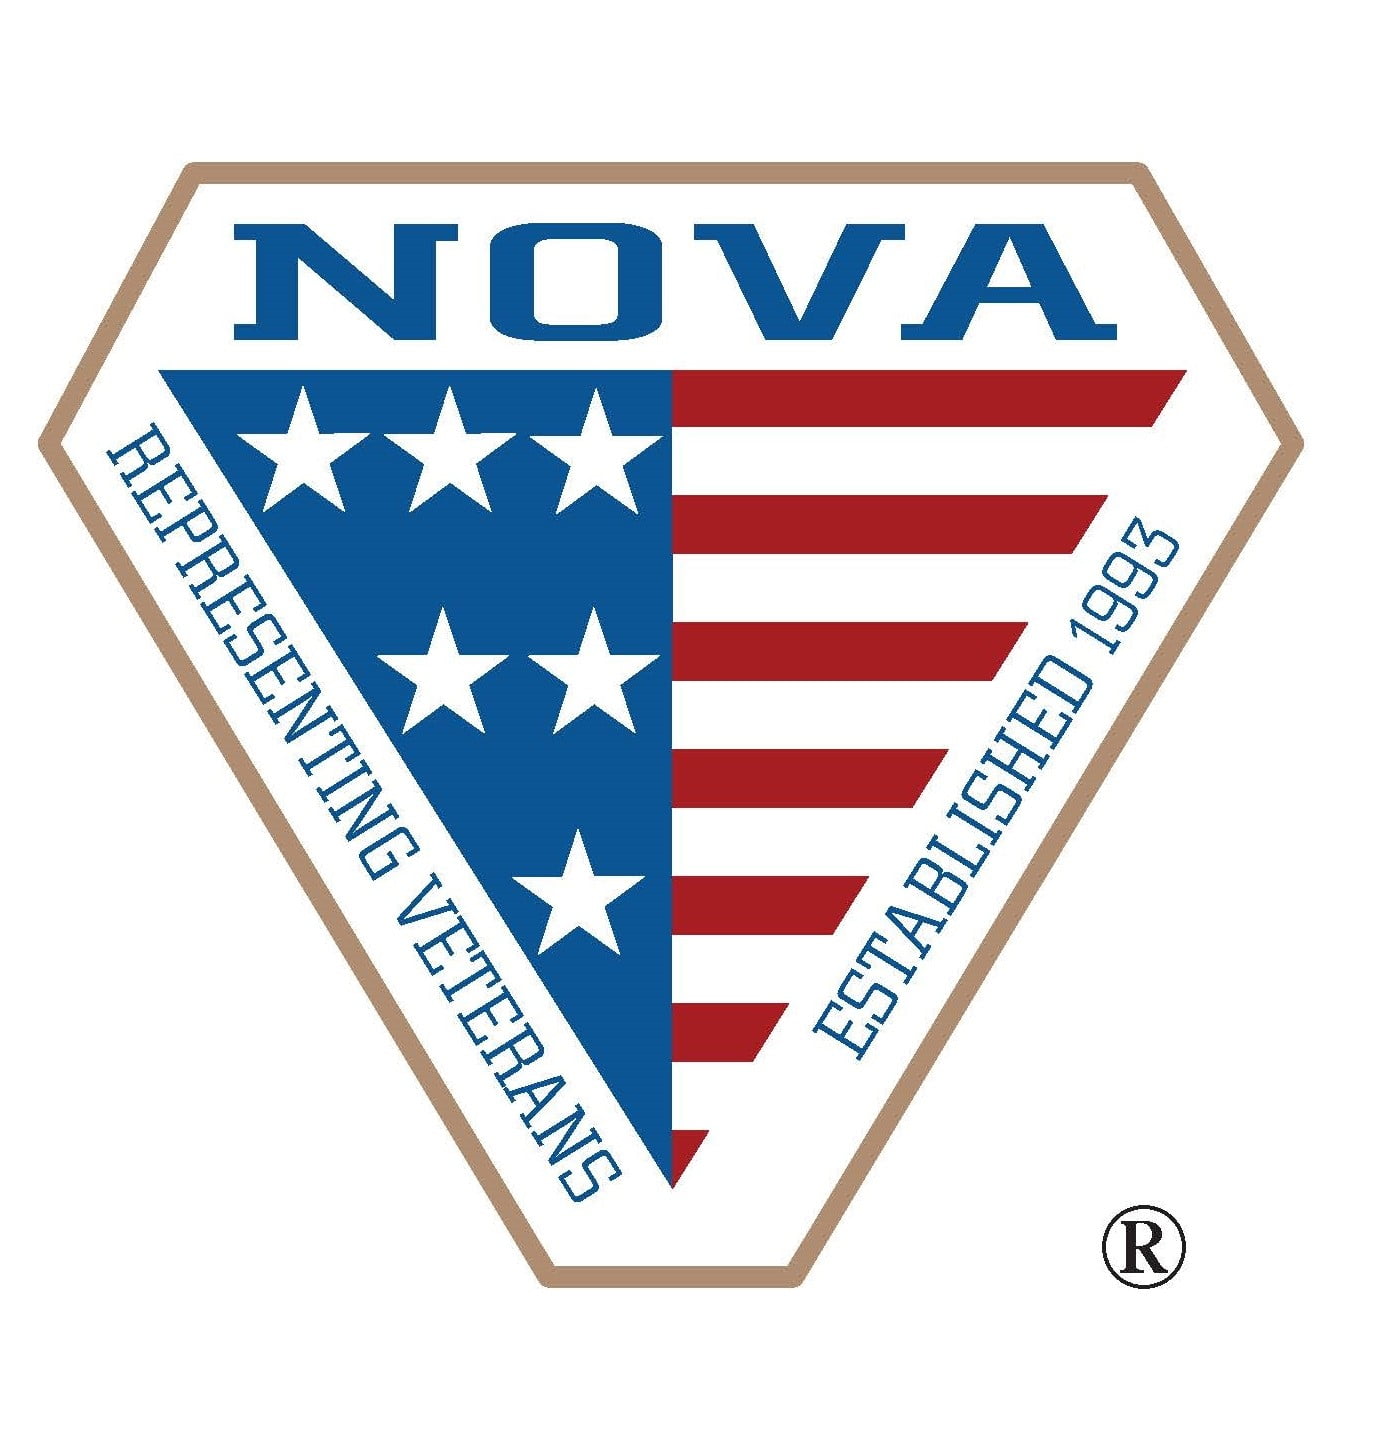 National Organization of Veterans Advocates